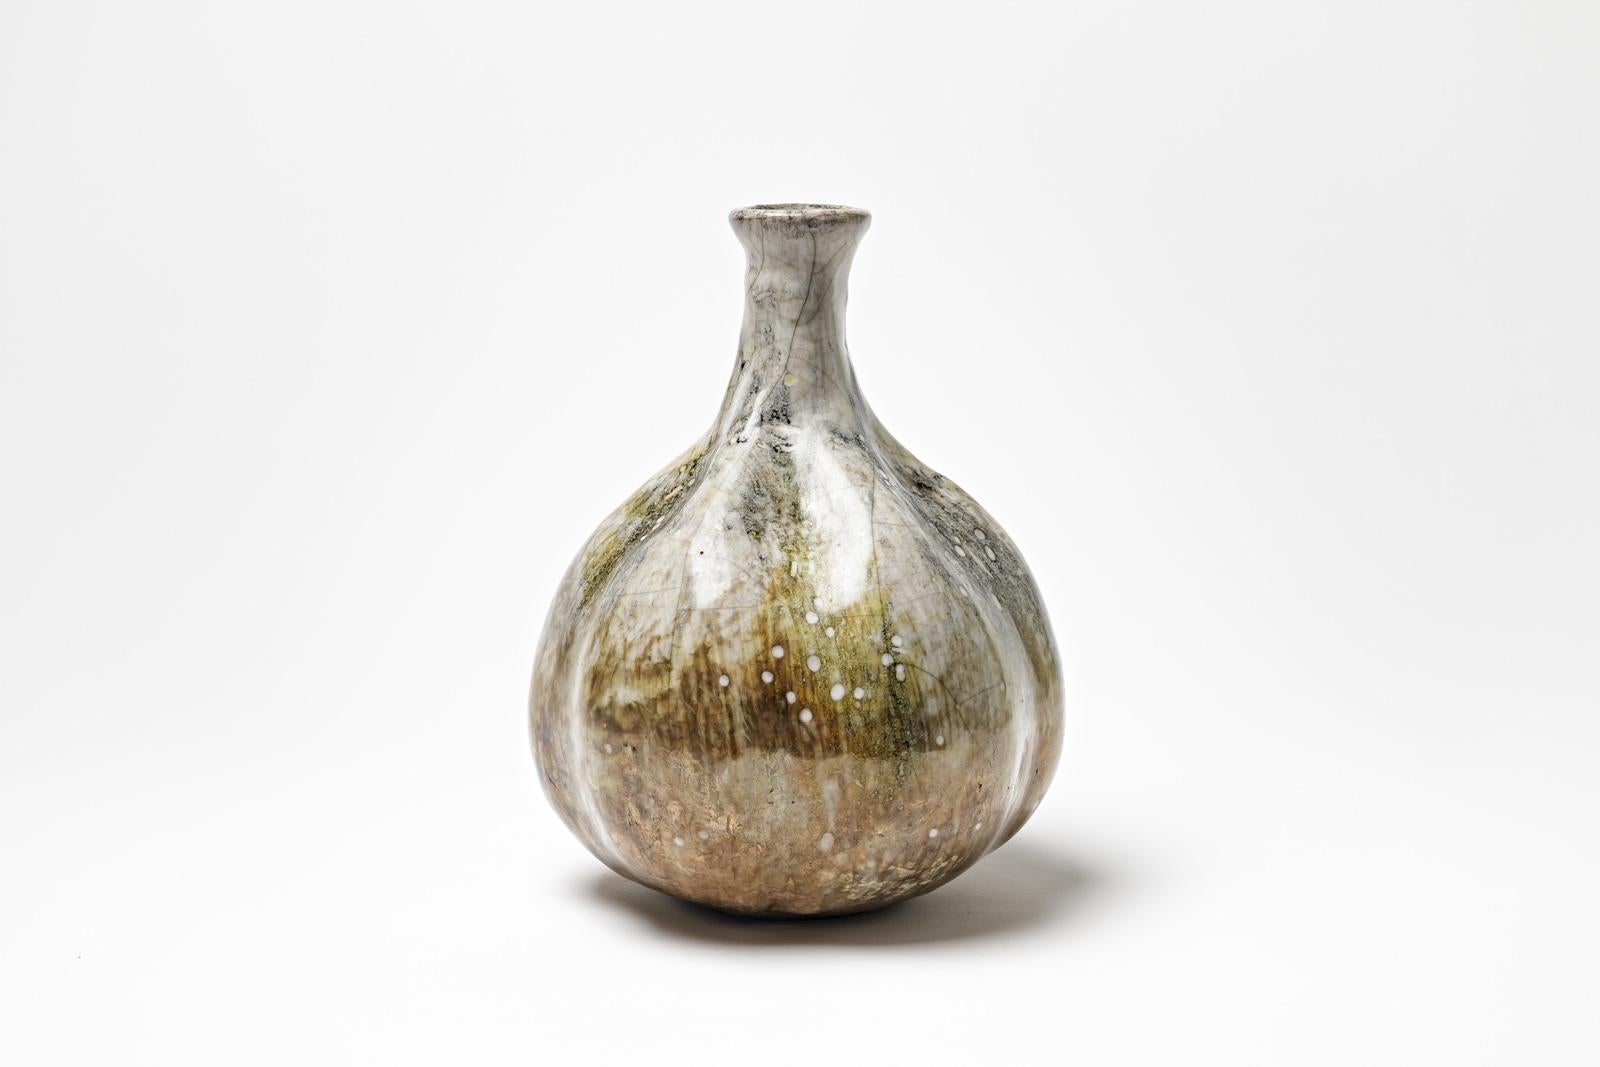 White/brown glazed ceramic vase by Gisèle Buthod Garçon. 
Raku fired. Artist monogram under the base. Circa 1980-1990. 
H : 9.4’ x 5.9’ inches.